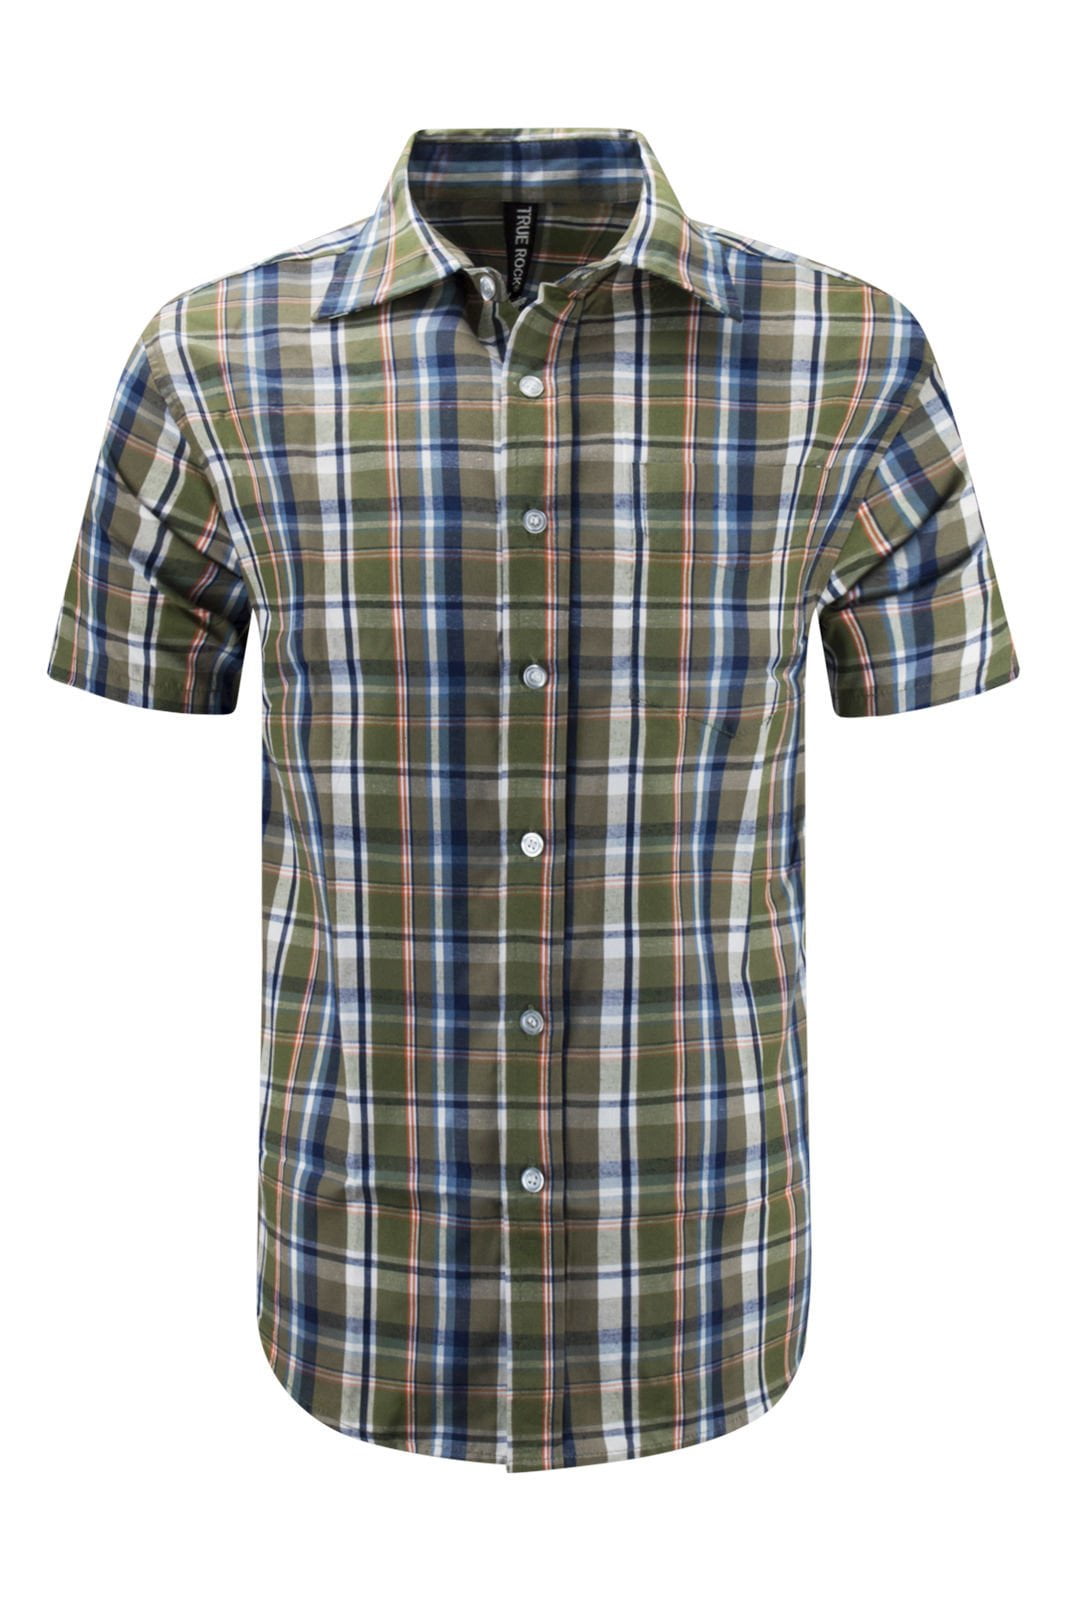 NEW Men Button Up Down Shirt Striped Plaid Short Sleeve Stripes Sizes S-XL